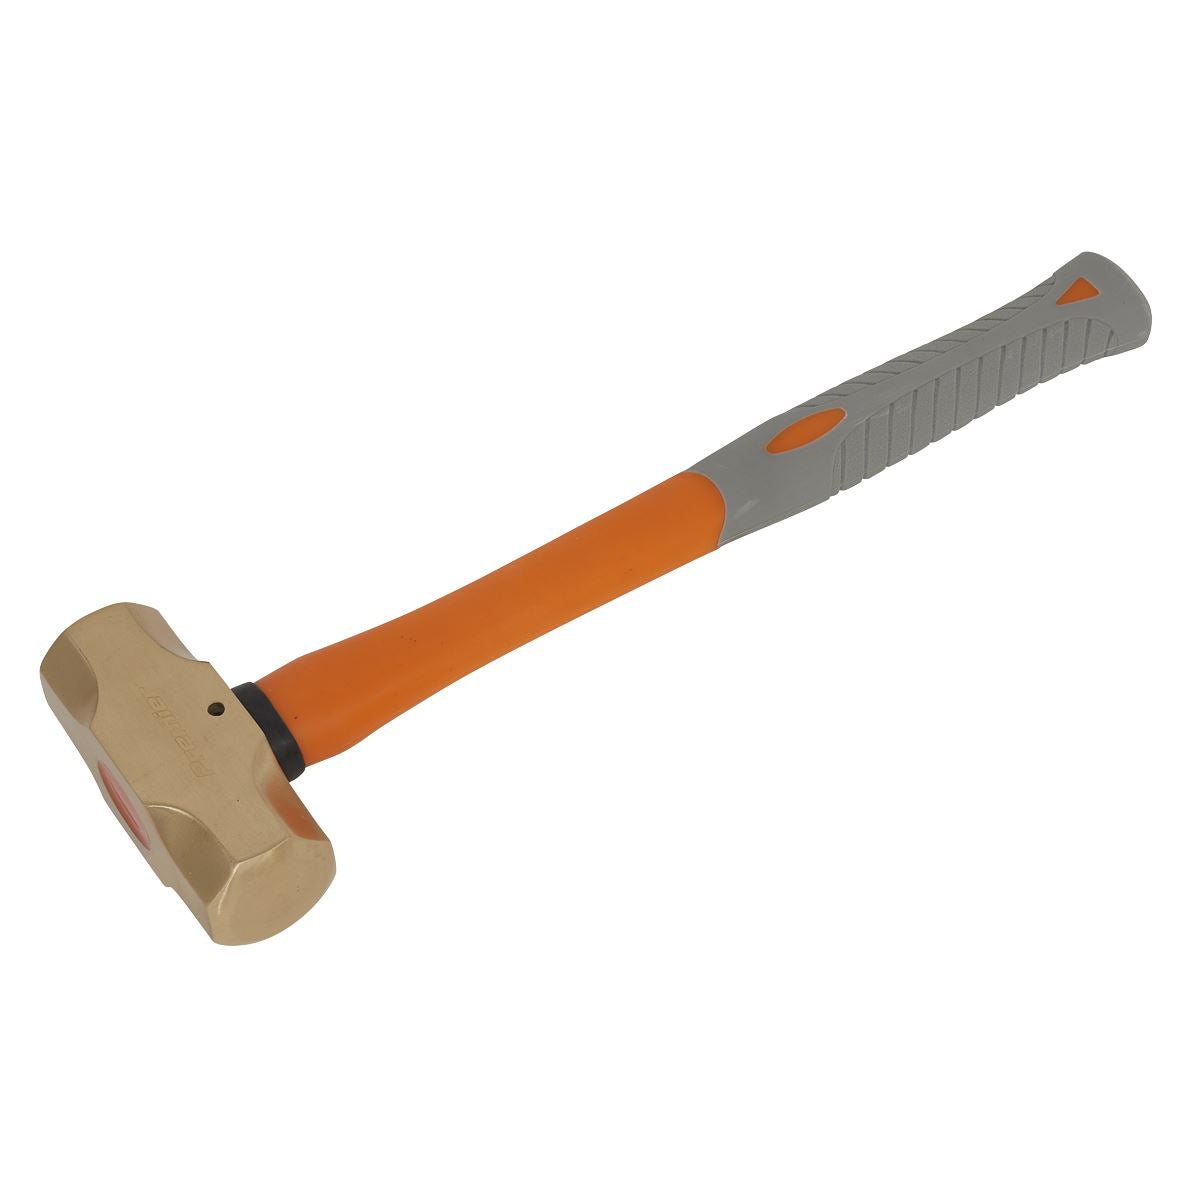 Sealey Premier Sledge Hammer 3lb - Non-Sparking